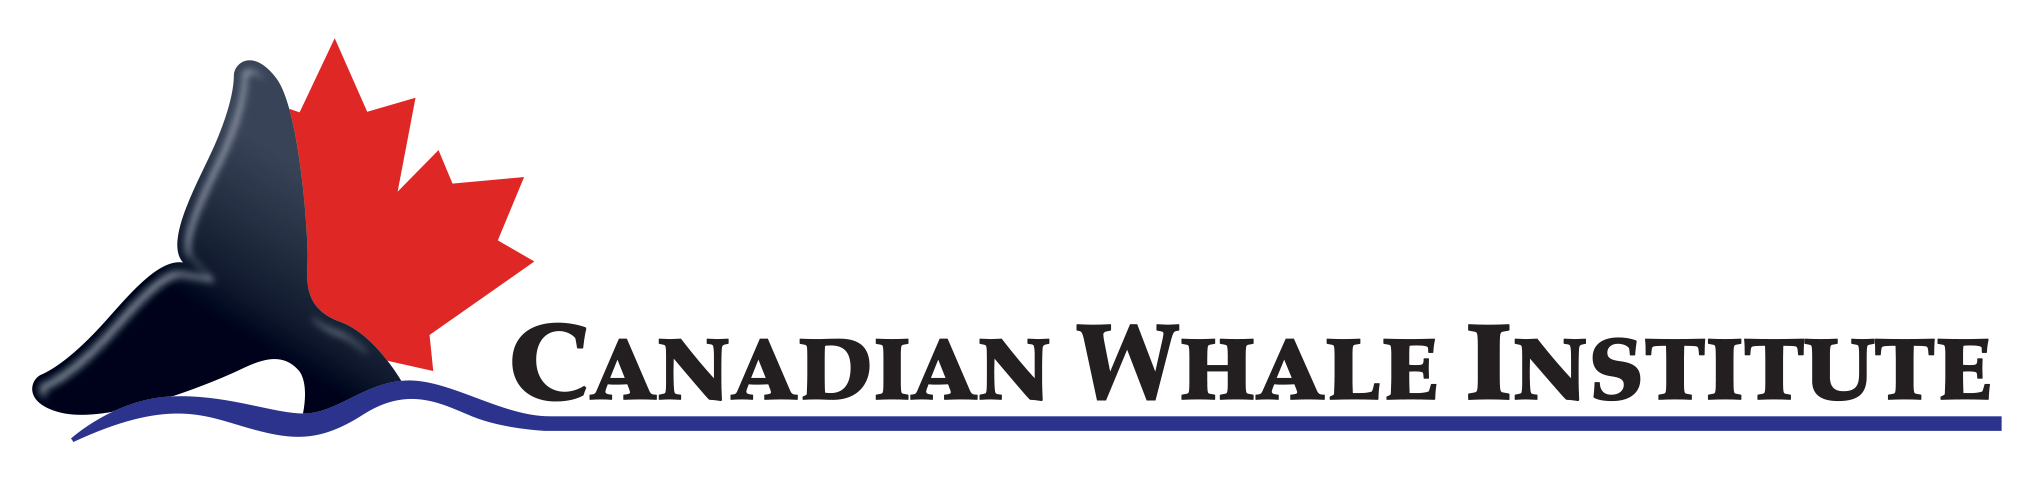 Canadian Whale Institute logo